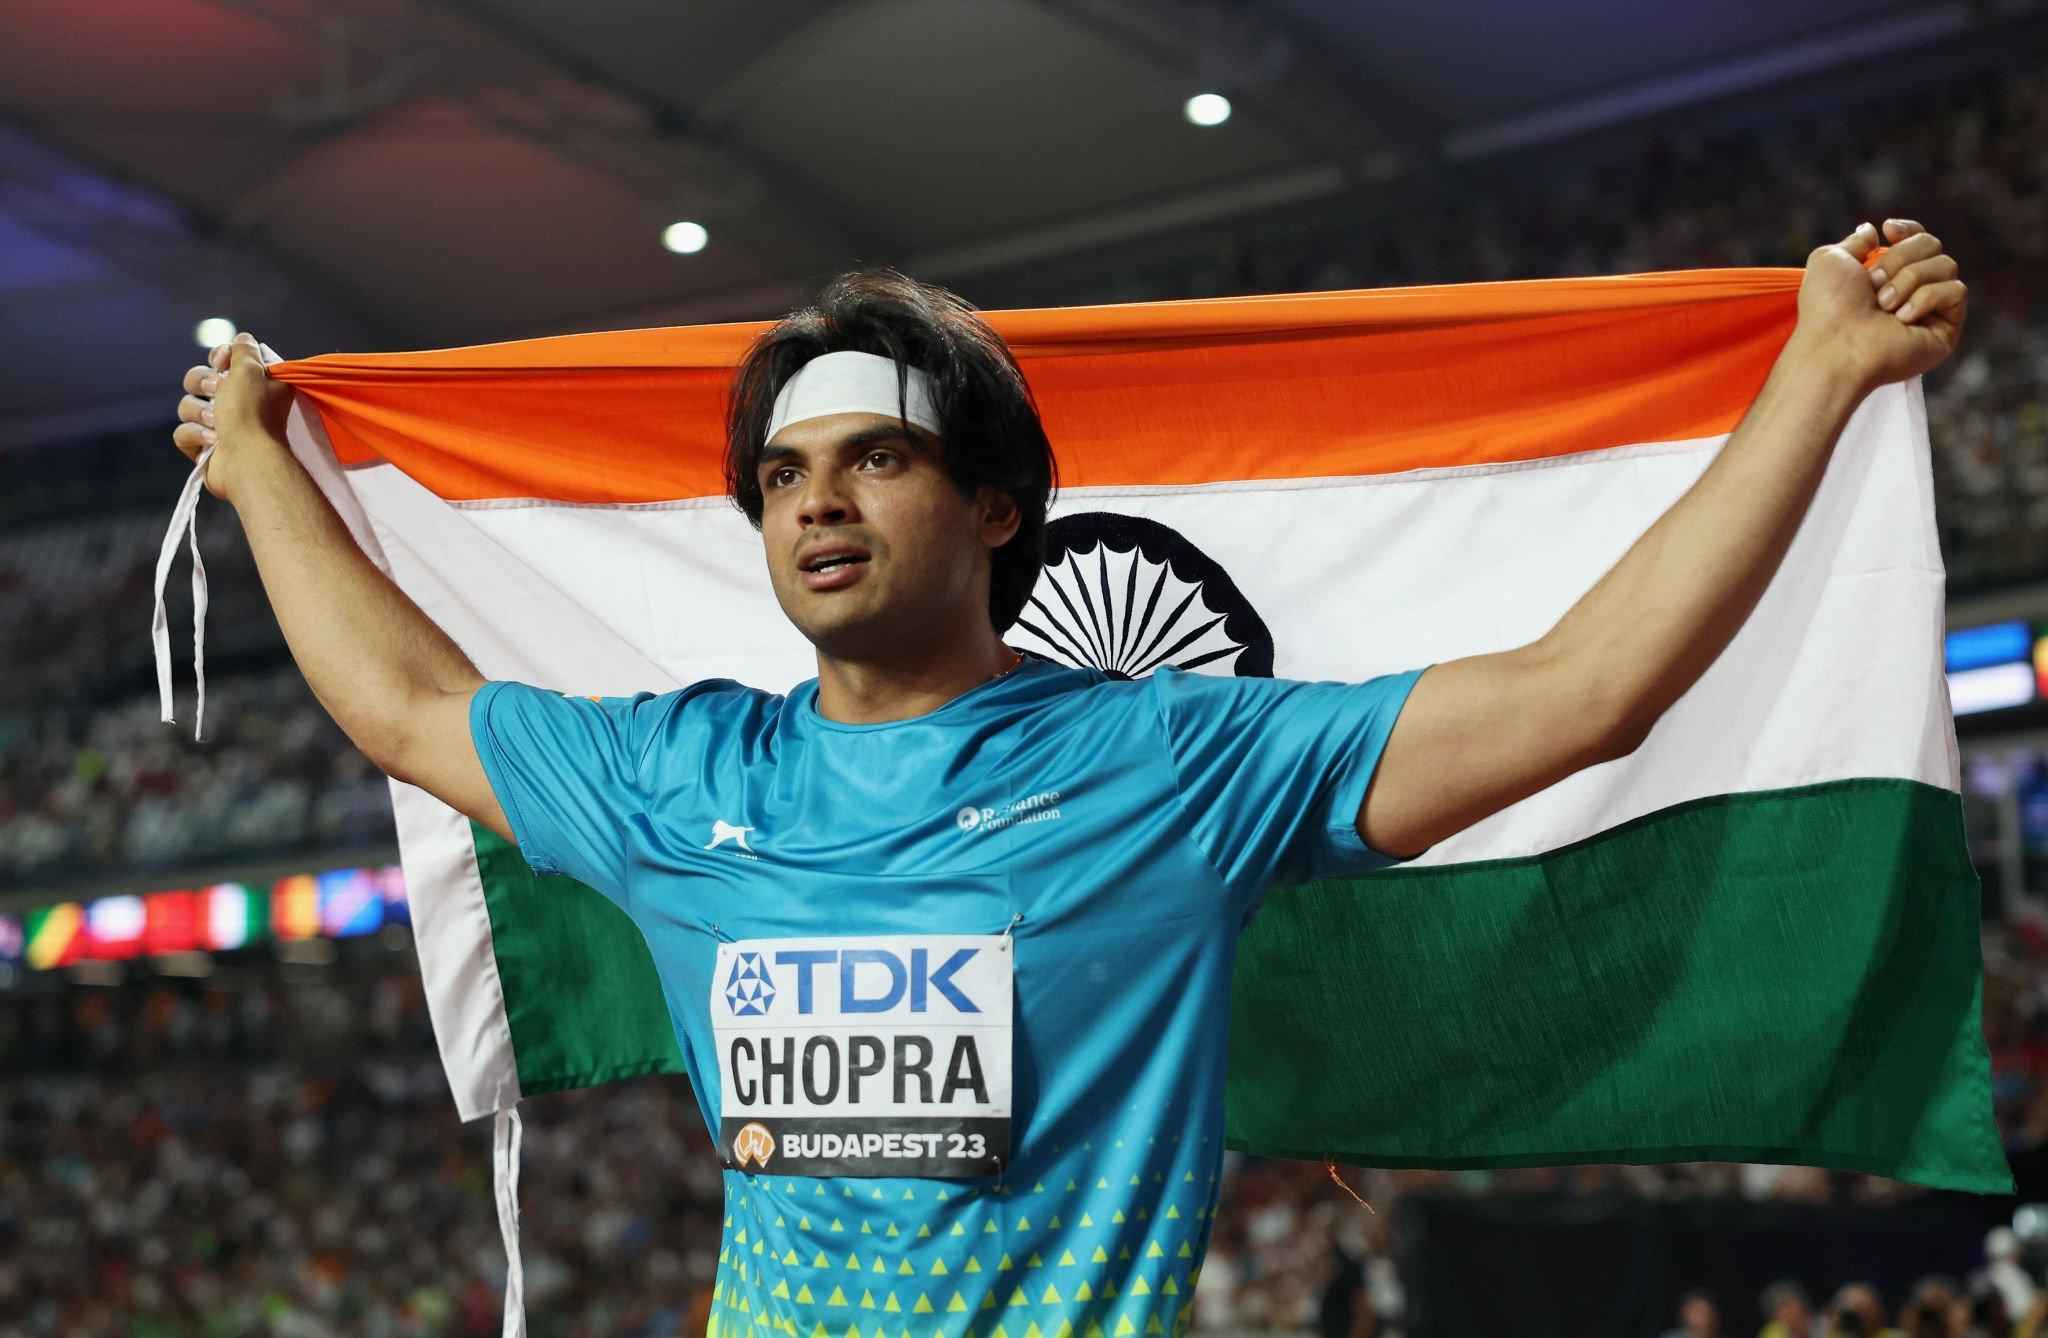 Neeraj Chopra Makes History as First Indian to Clinch Gold at World Athletics Championships